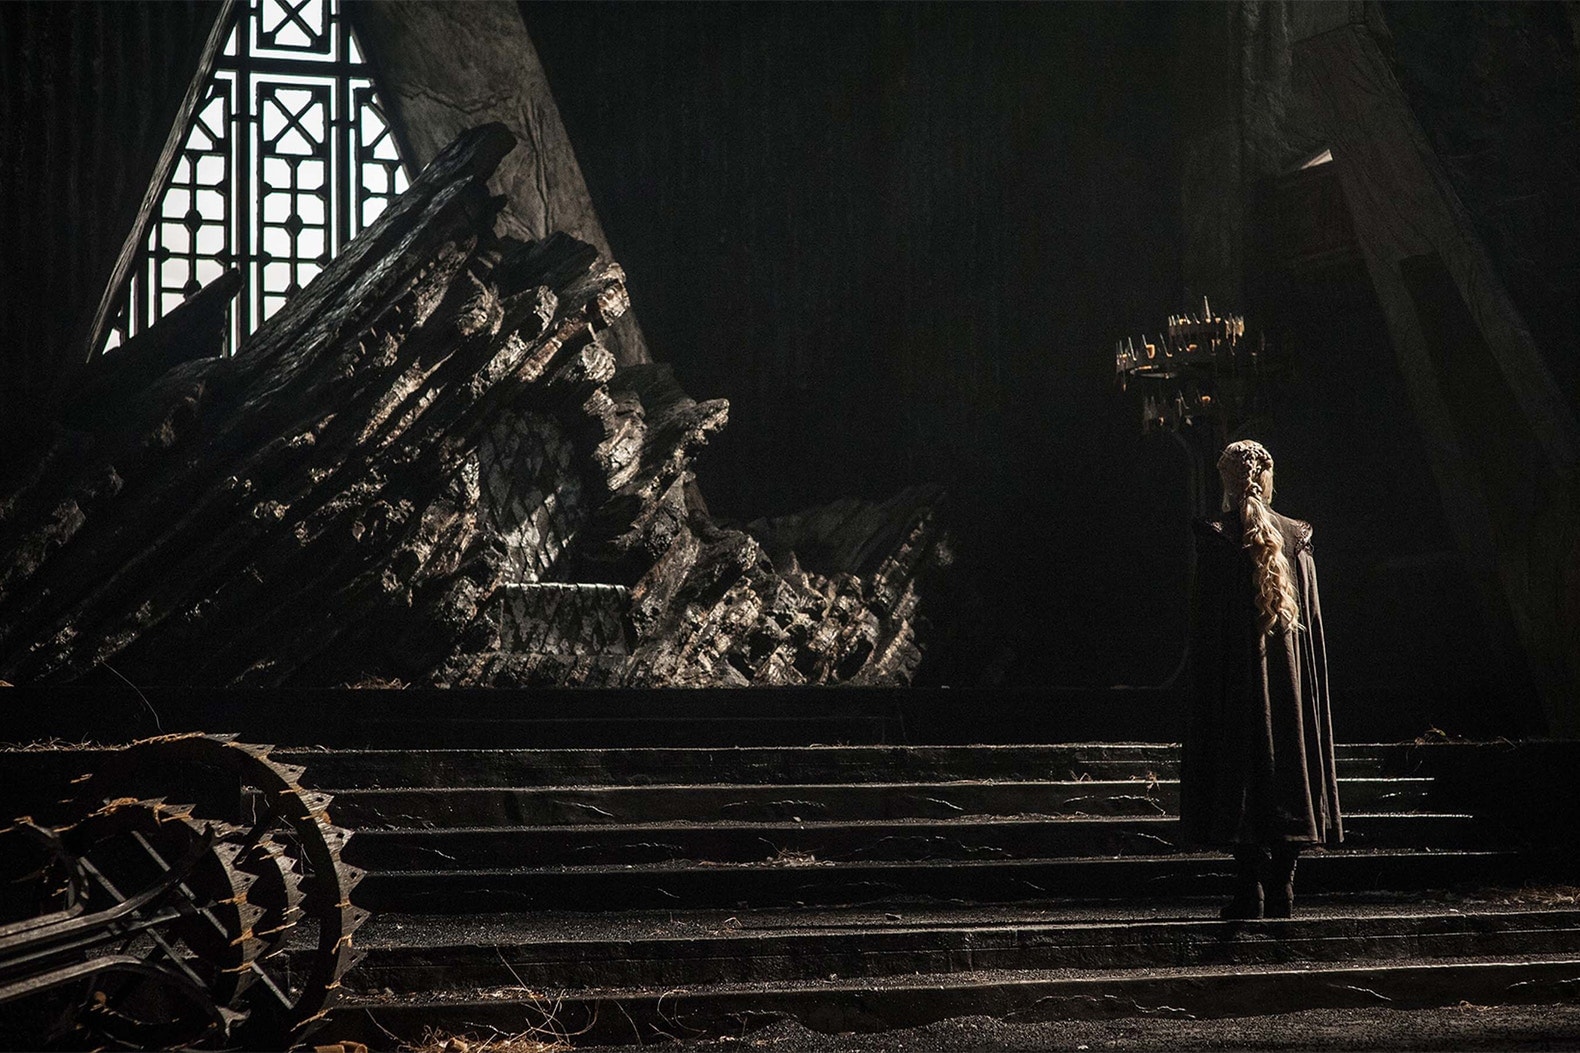 'Game of Thrones' Season 7 Premiere Episode Photos